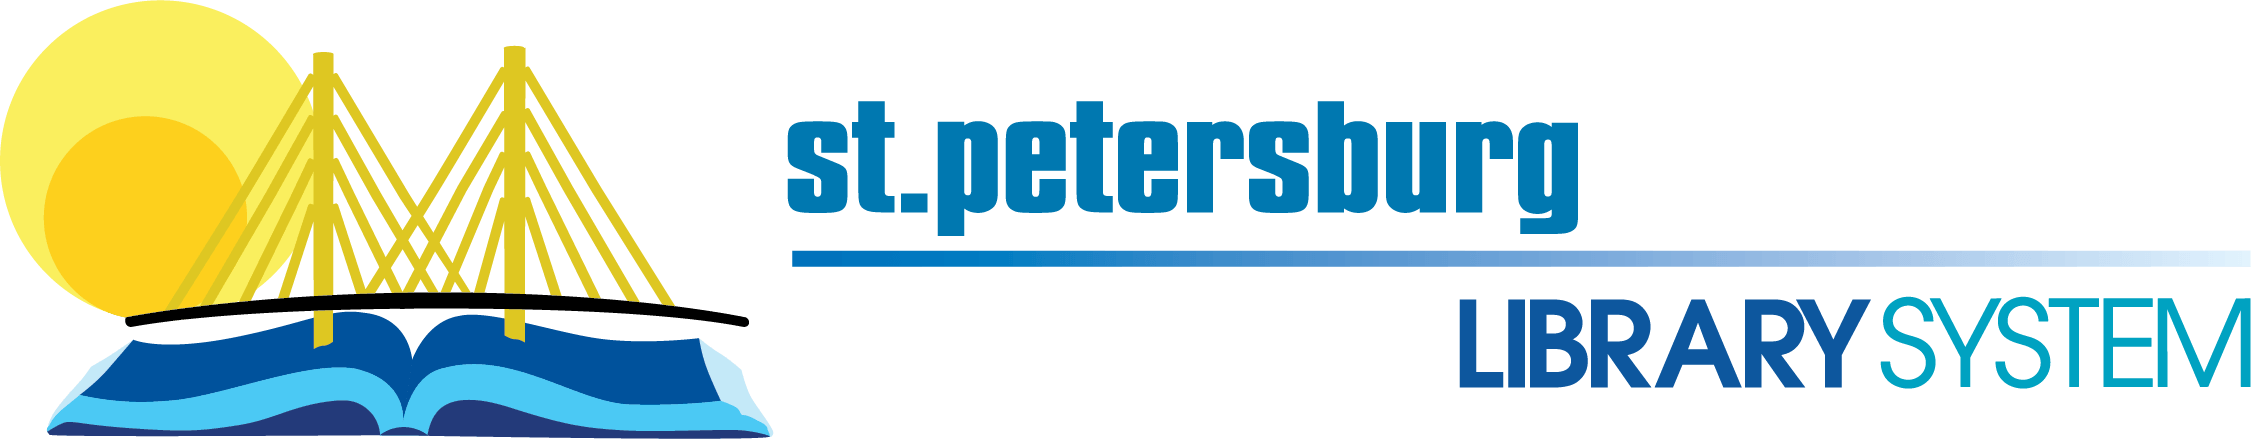 St. Petersburg Logo - St. Petersburg Library System - Home